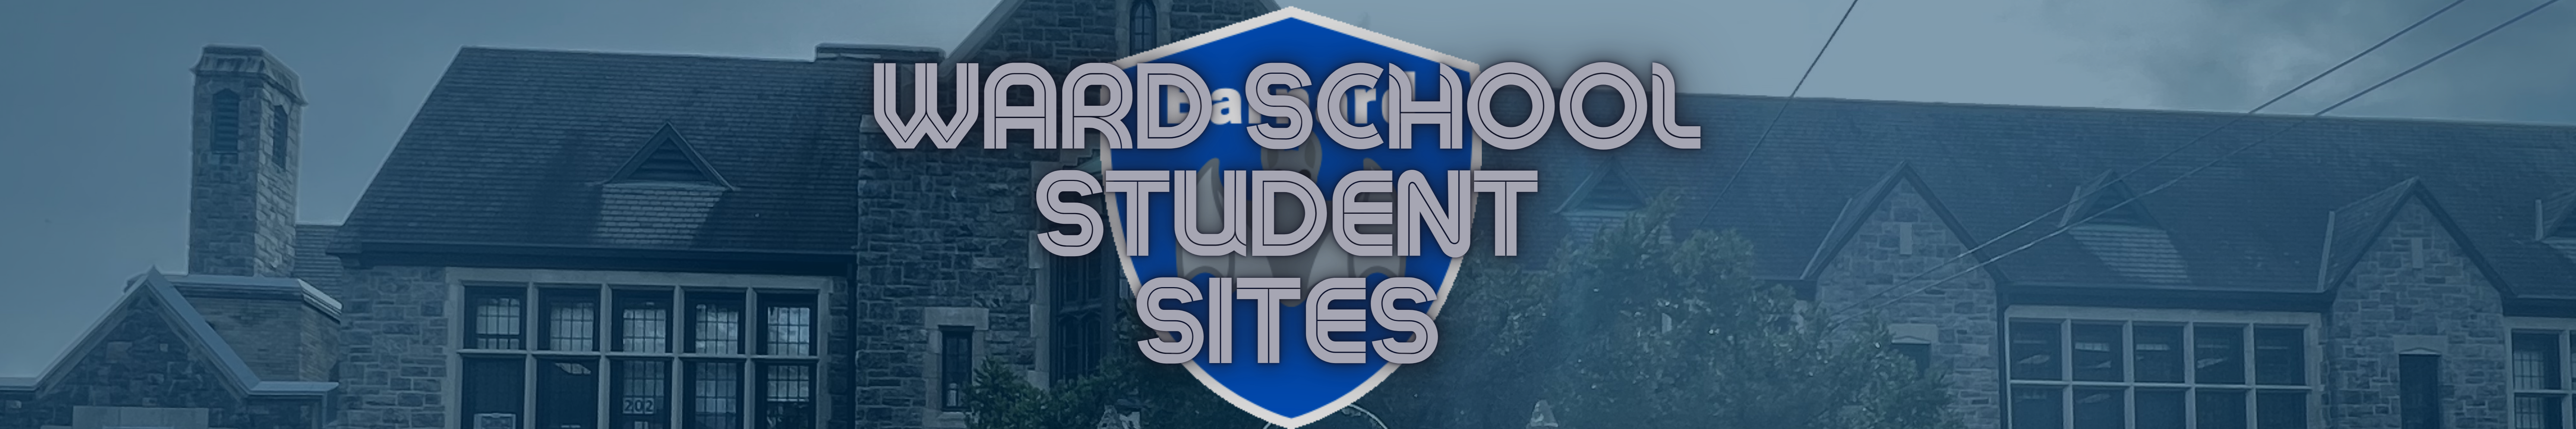 Ward School Student Sites banner